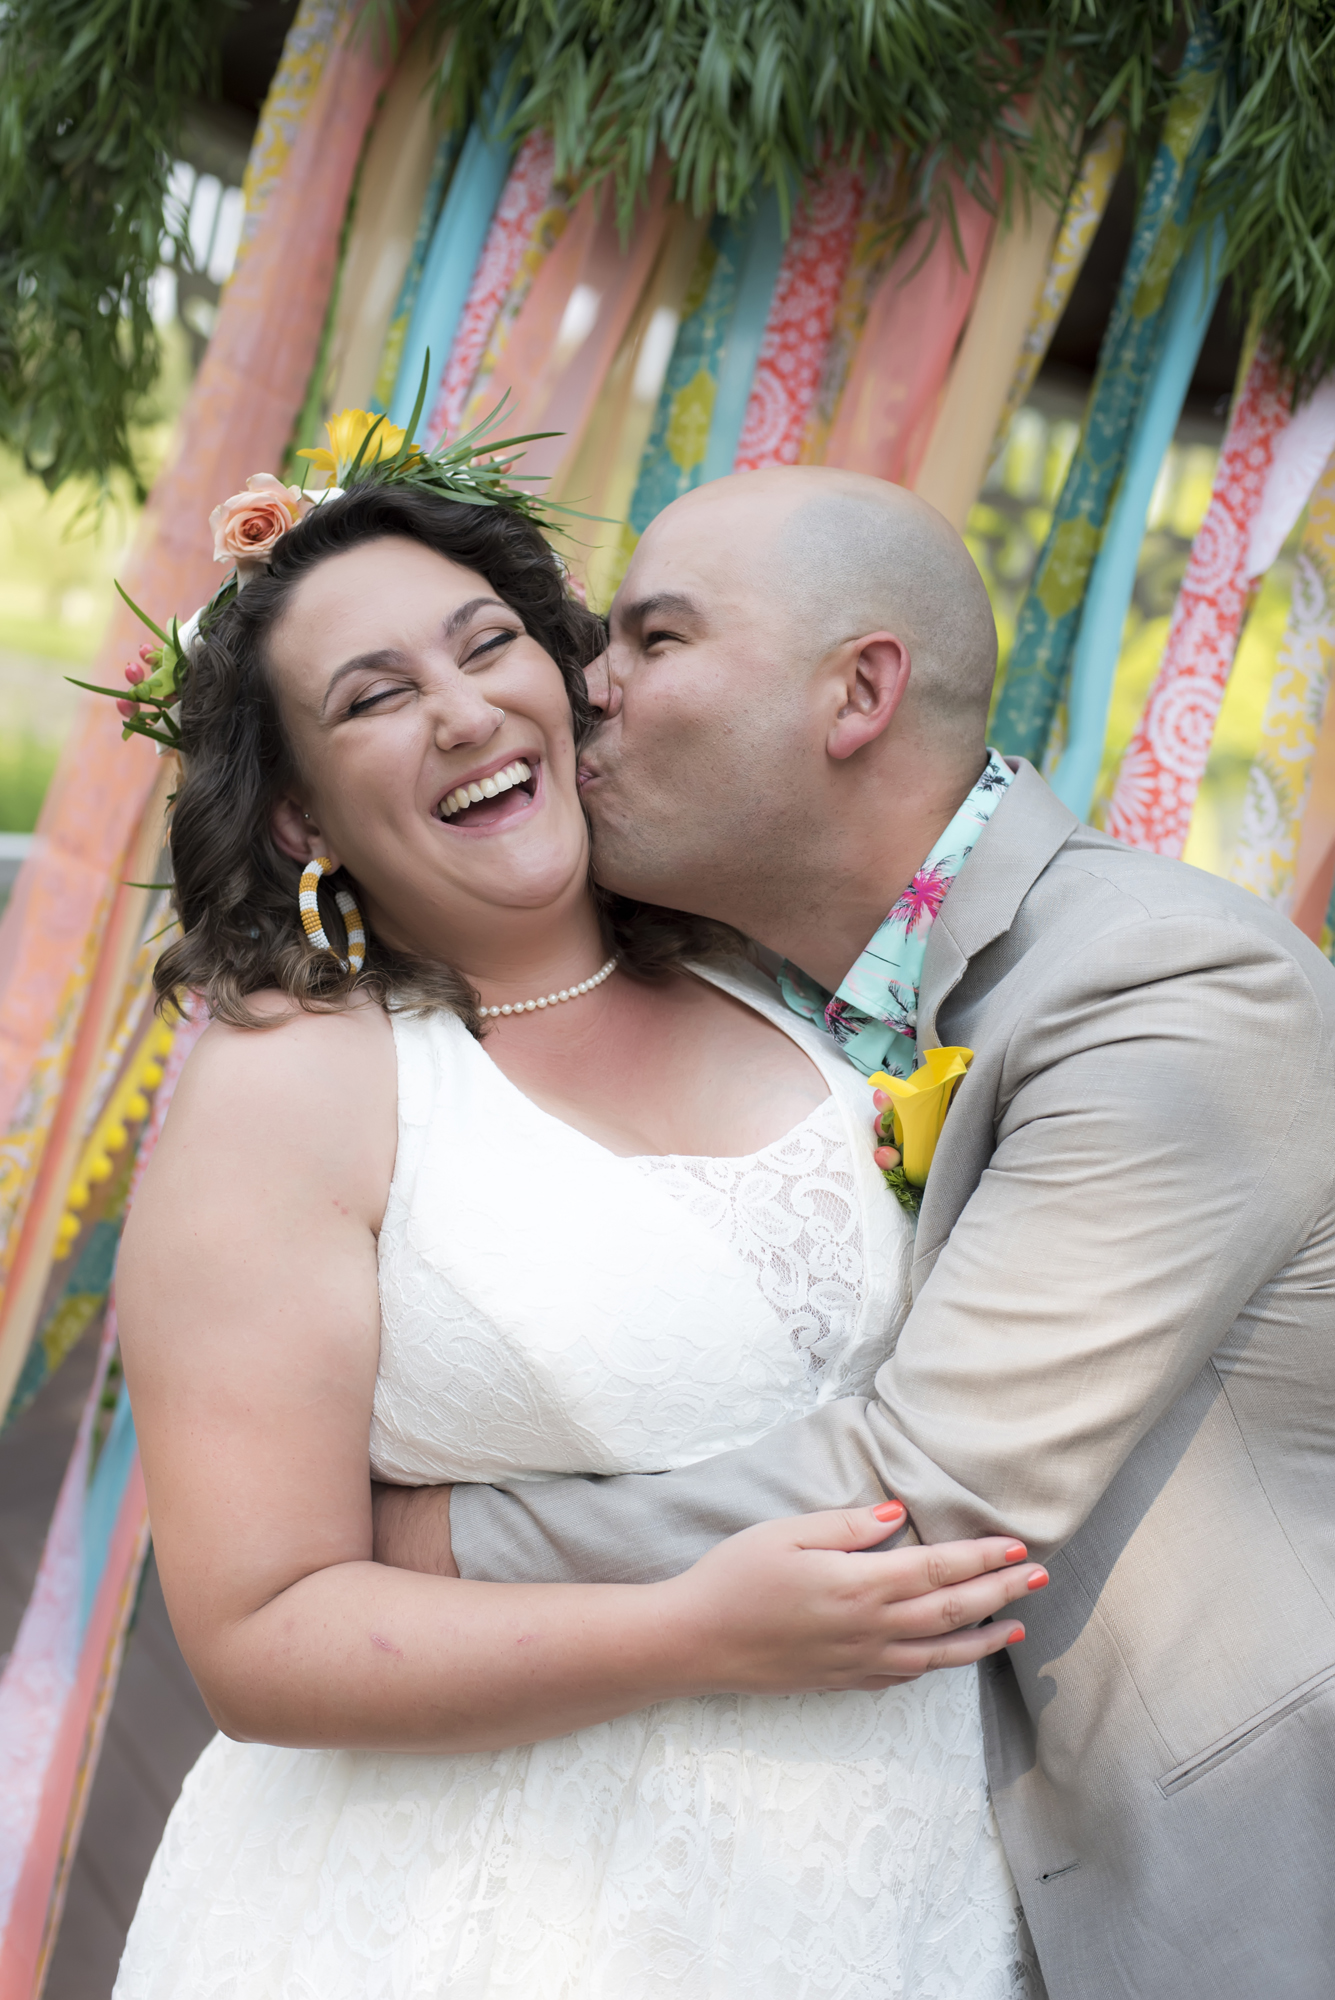 A man kisses a woman's cheek on their wedding day.